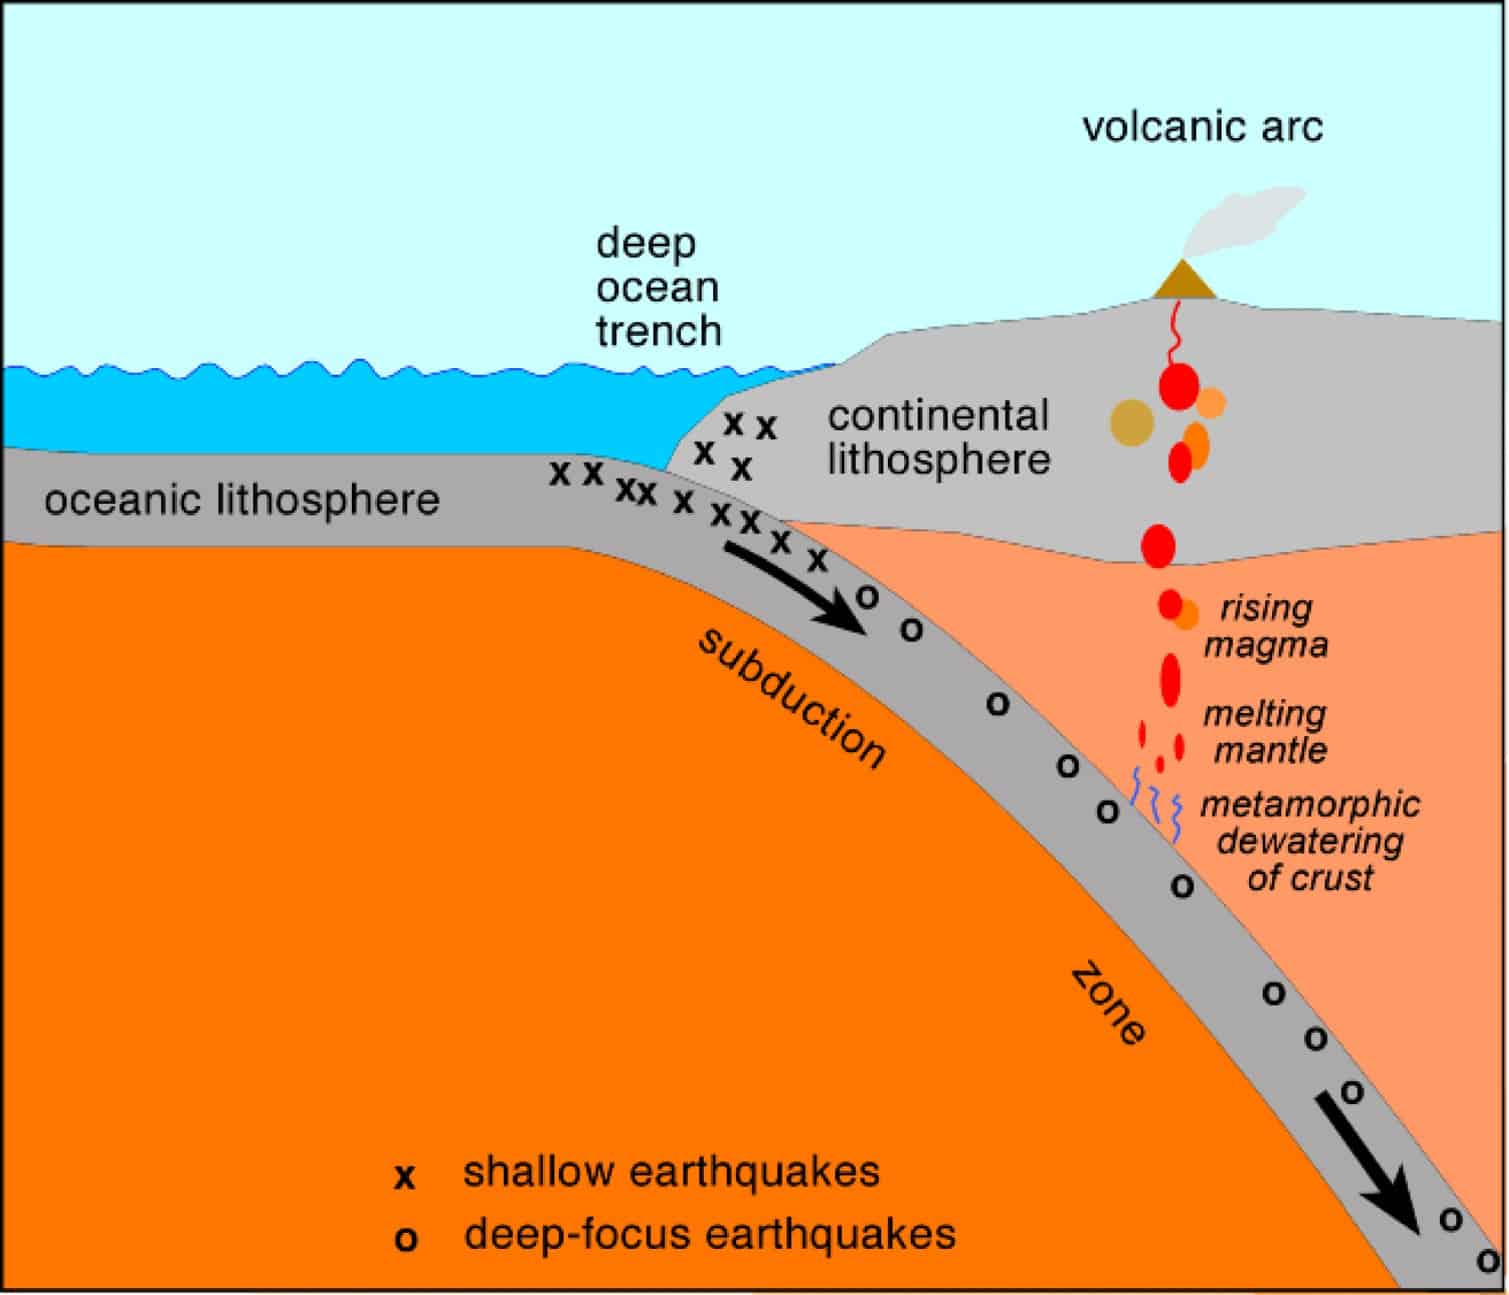 Anak Krakatau volcano (Indonesia) - INSIGHTSIAS - Simplifying UPSC IAS Exam  Preparation